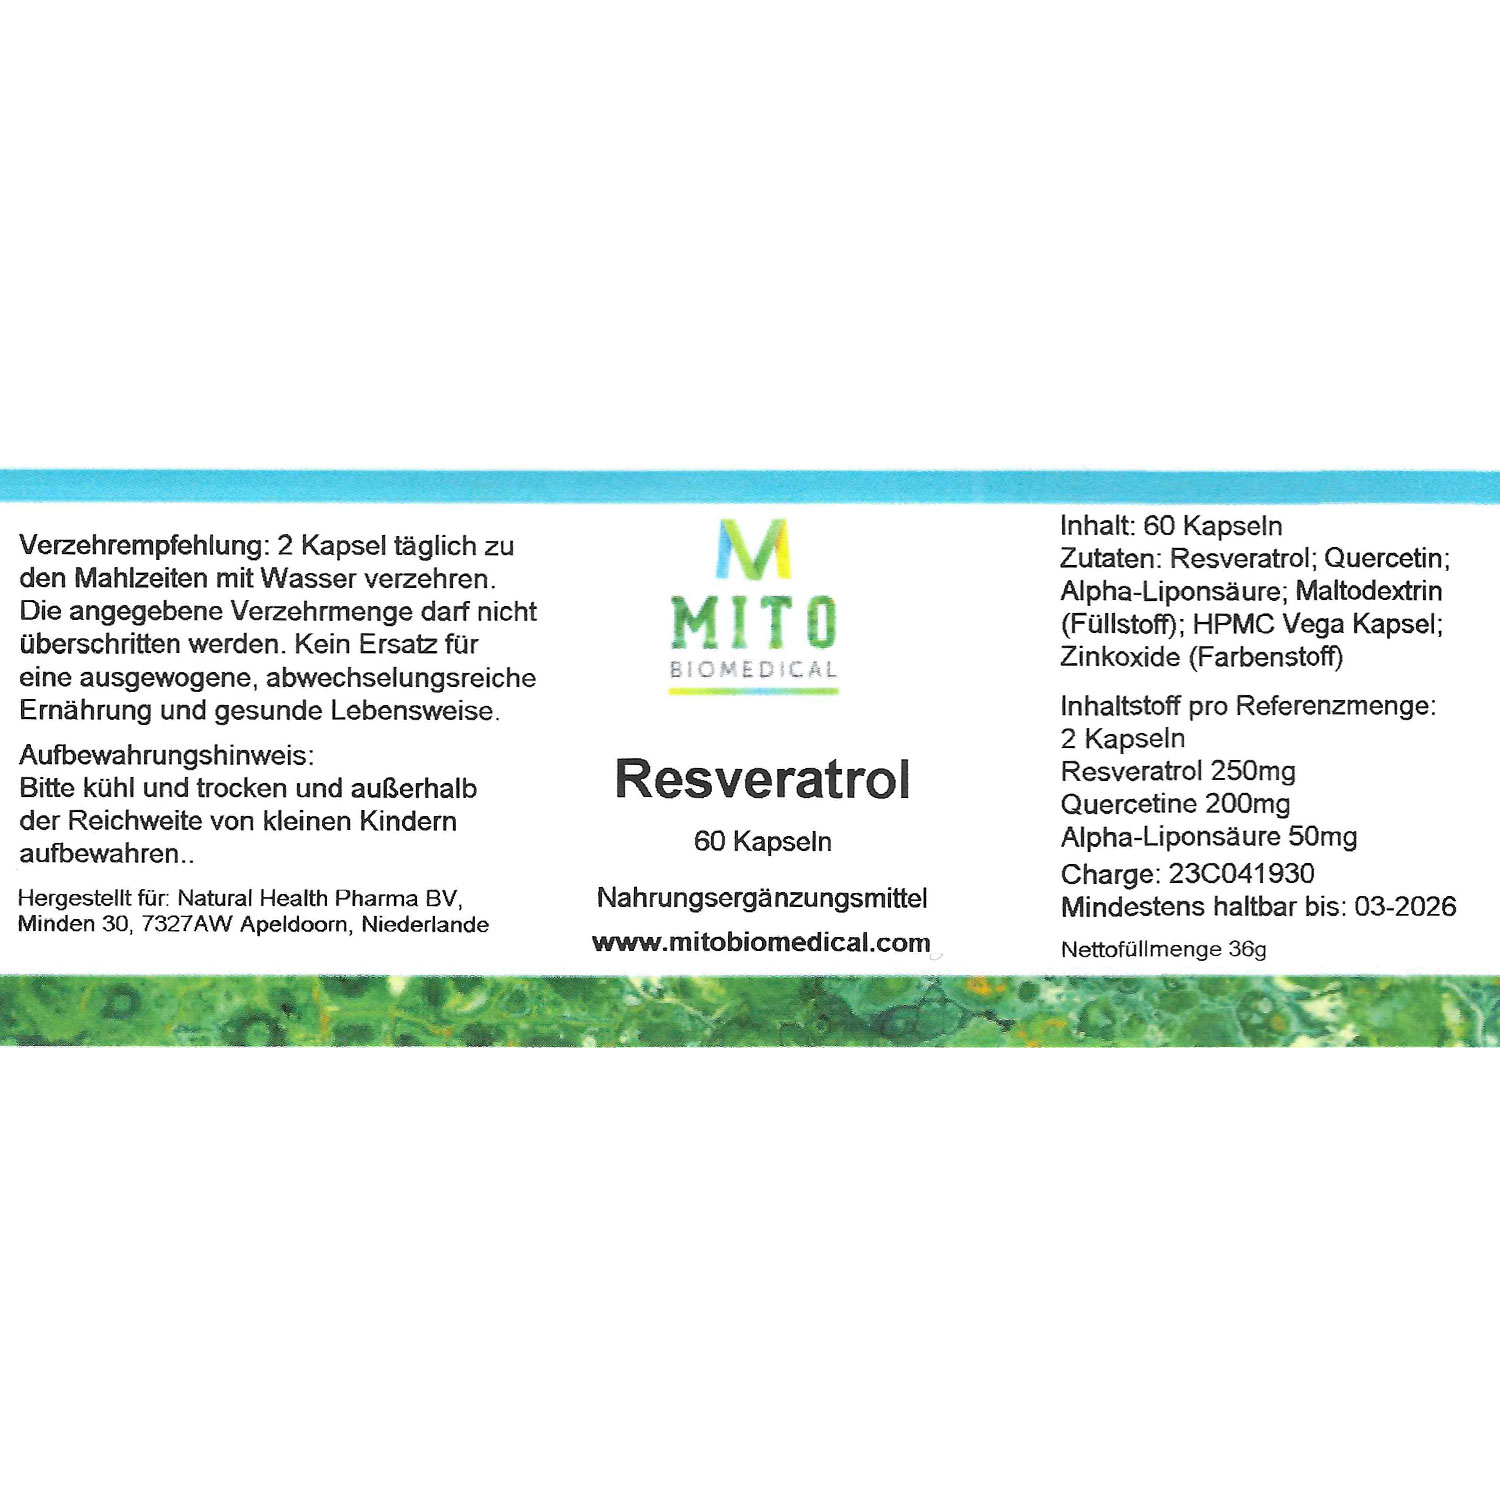 MITO Resveratrol von Mitobiomedical - 60 Kapseln